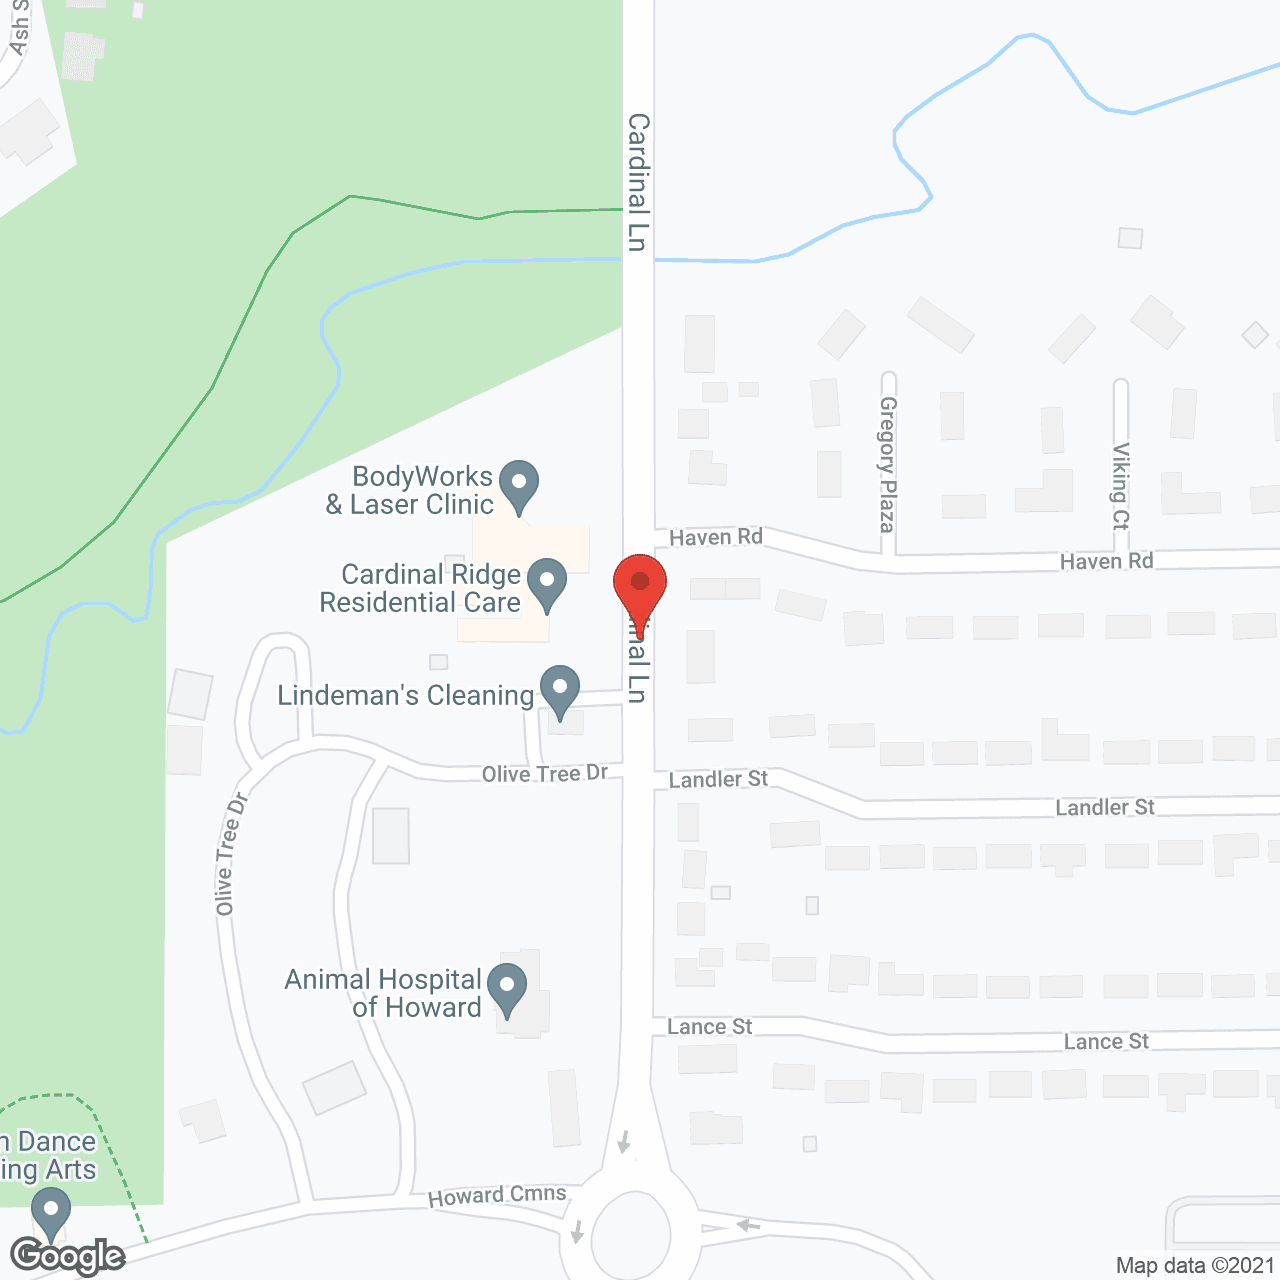 Cardinal Ridge Residential Care in google map